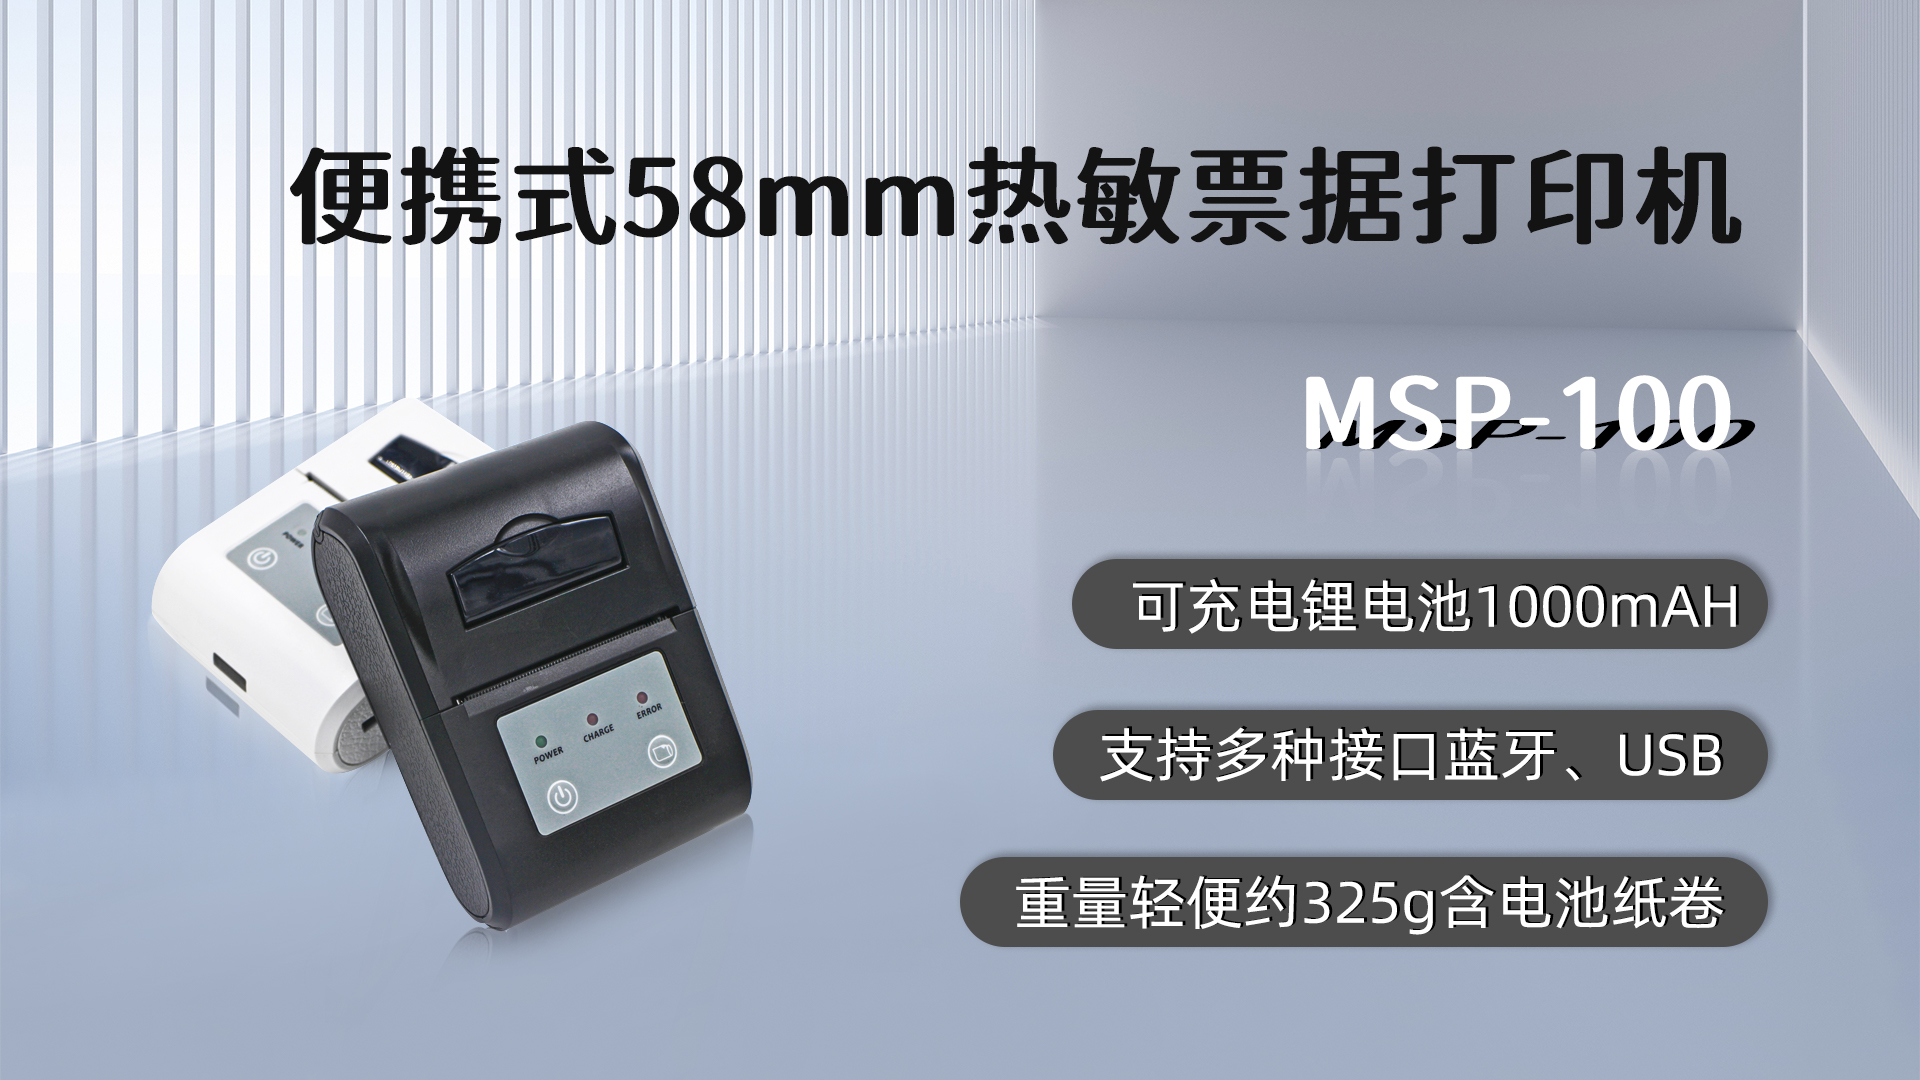 MSP-100,58mm便携式热敏小票打印机的优点，蓝牙，USB接口，可充电锂电池1000mAH,重量轻便约325g